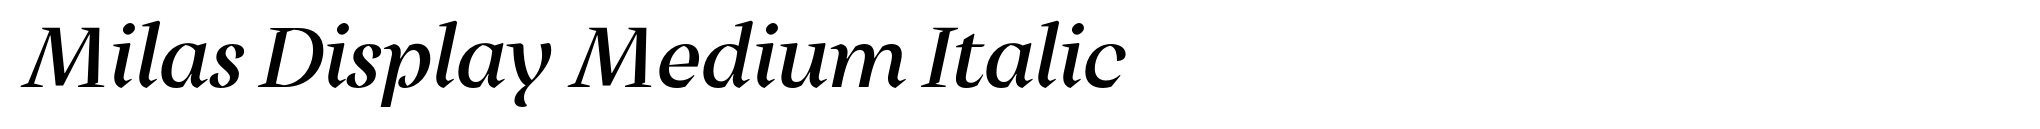 Milas Display Medium Italic image